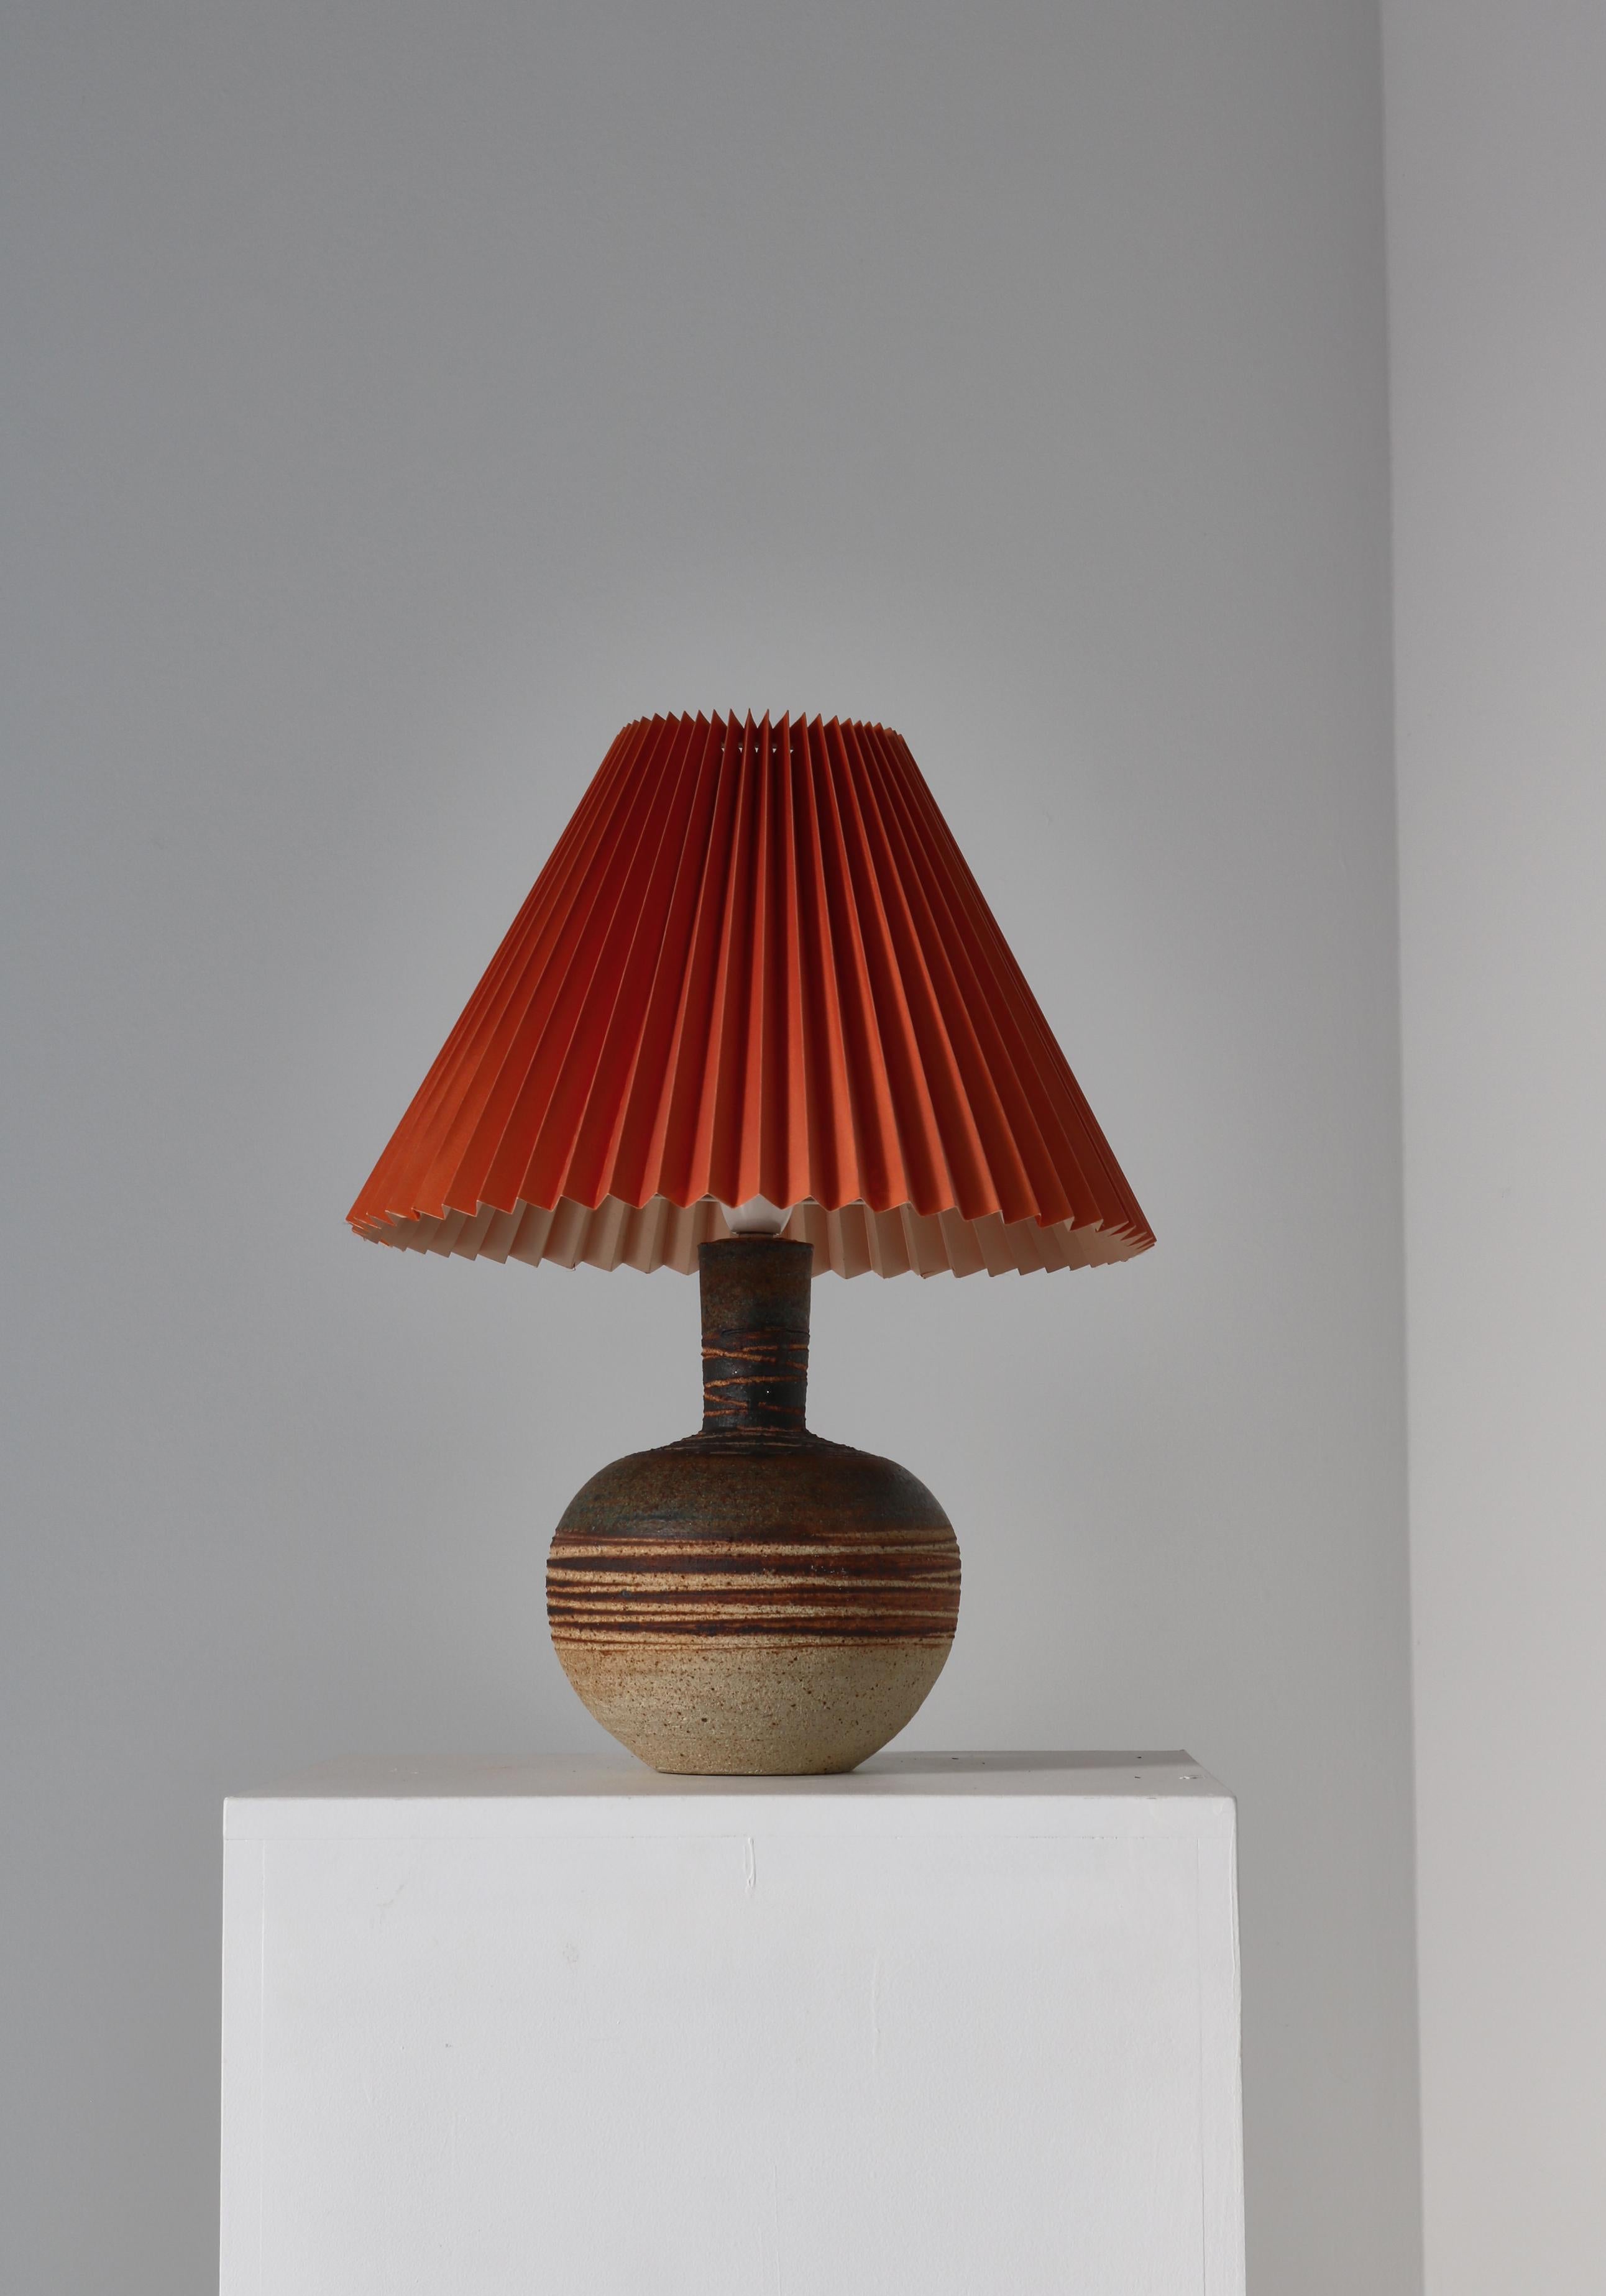 Danish Tue Poulsen Table Lamp Scandinavian Modern Ceramic in Earth Colors, 1960s For Sale